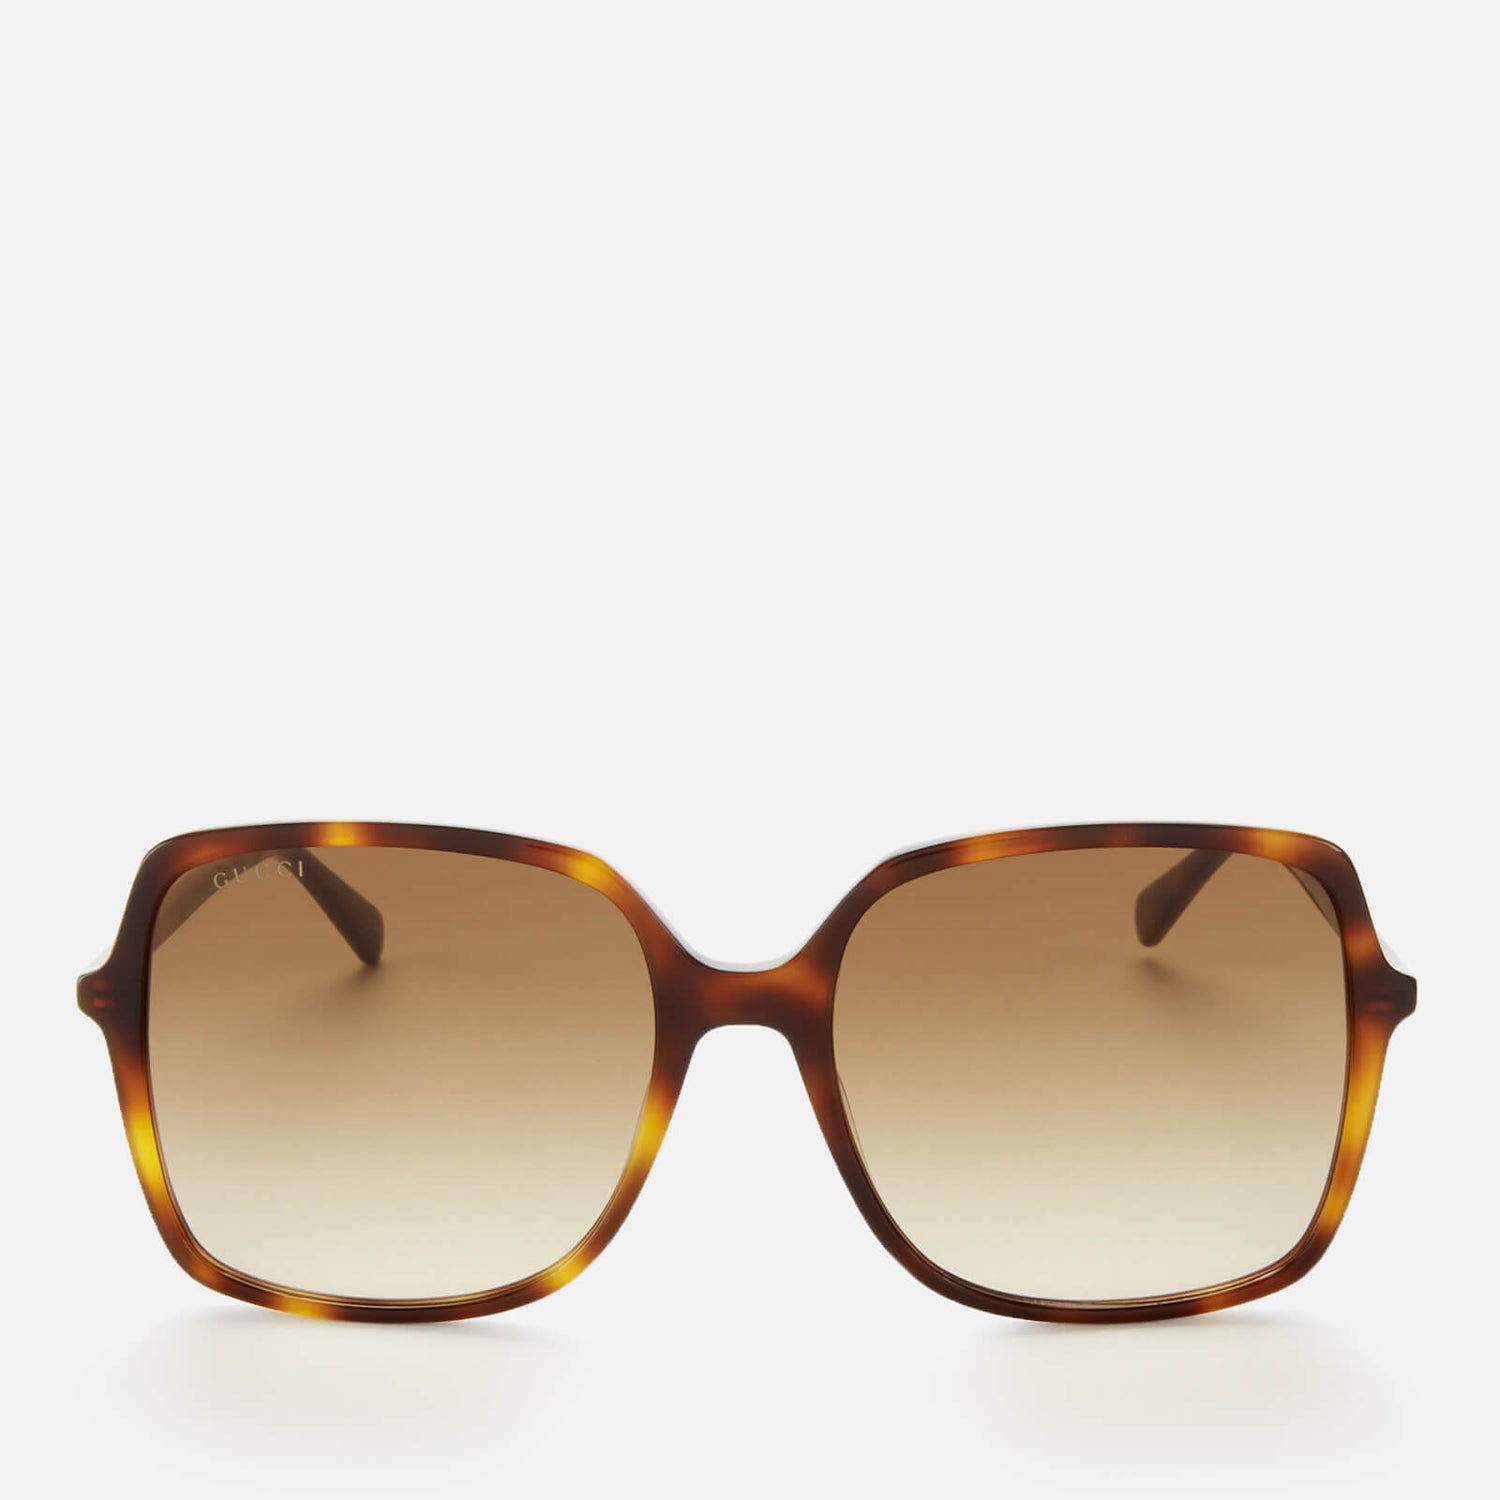 Gucci Women's Oversized Square Frame Acetate Sunglasses - Havana - Free ...